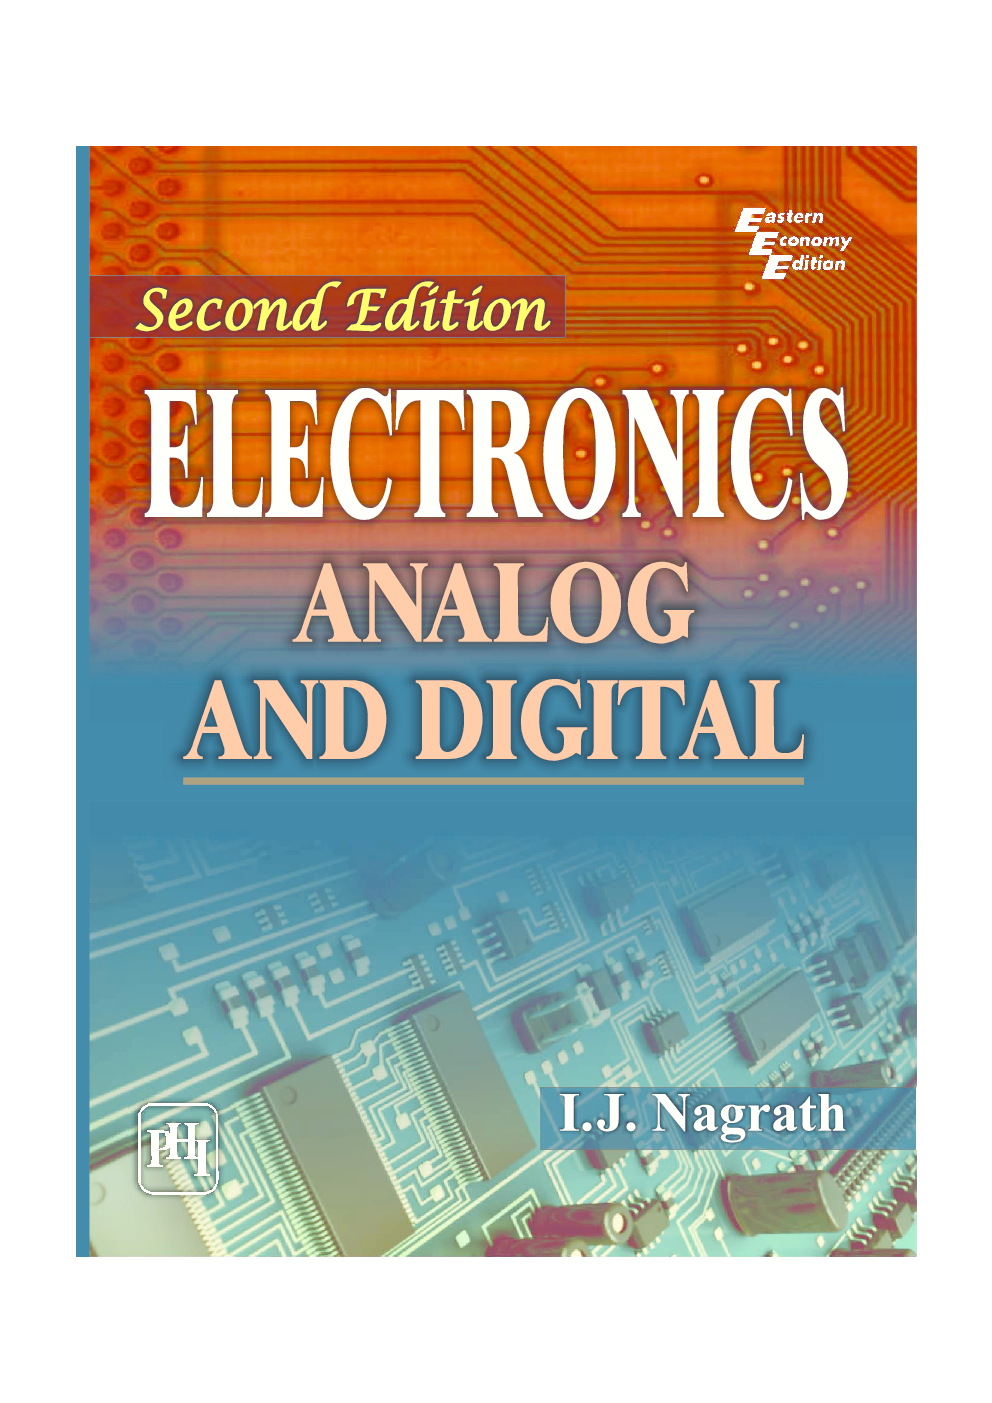 by leach analog and digital electronics pdf